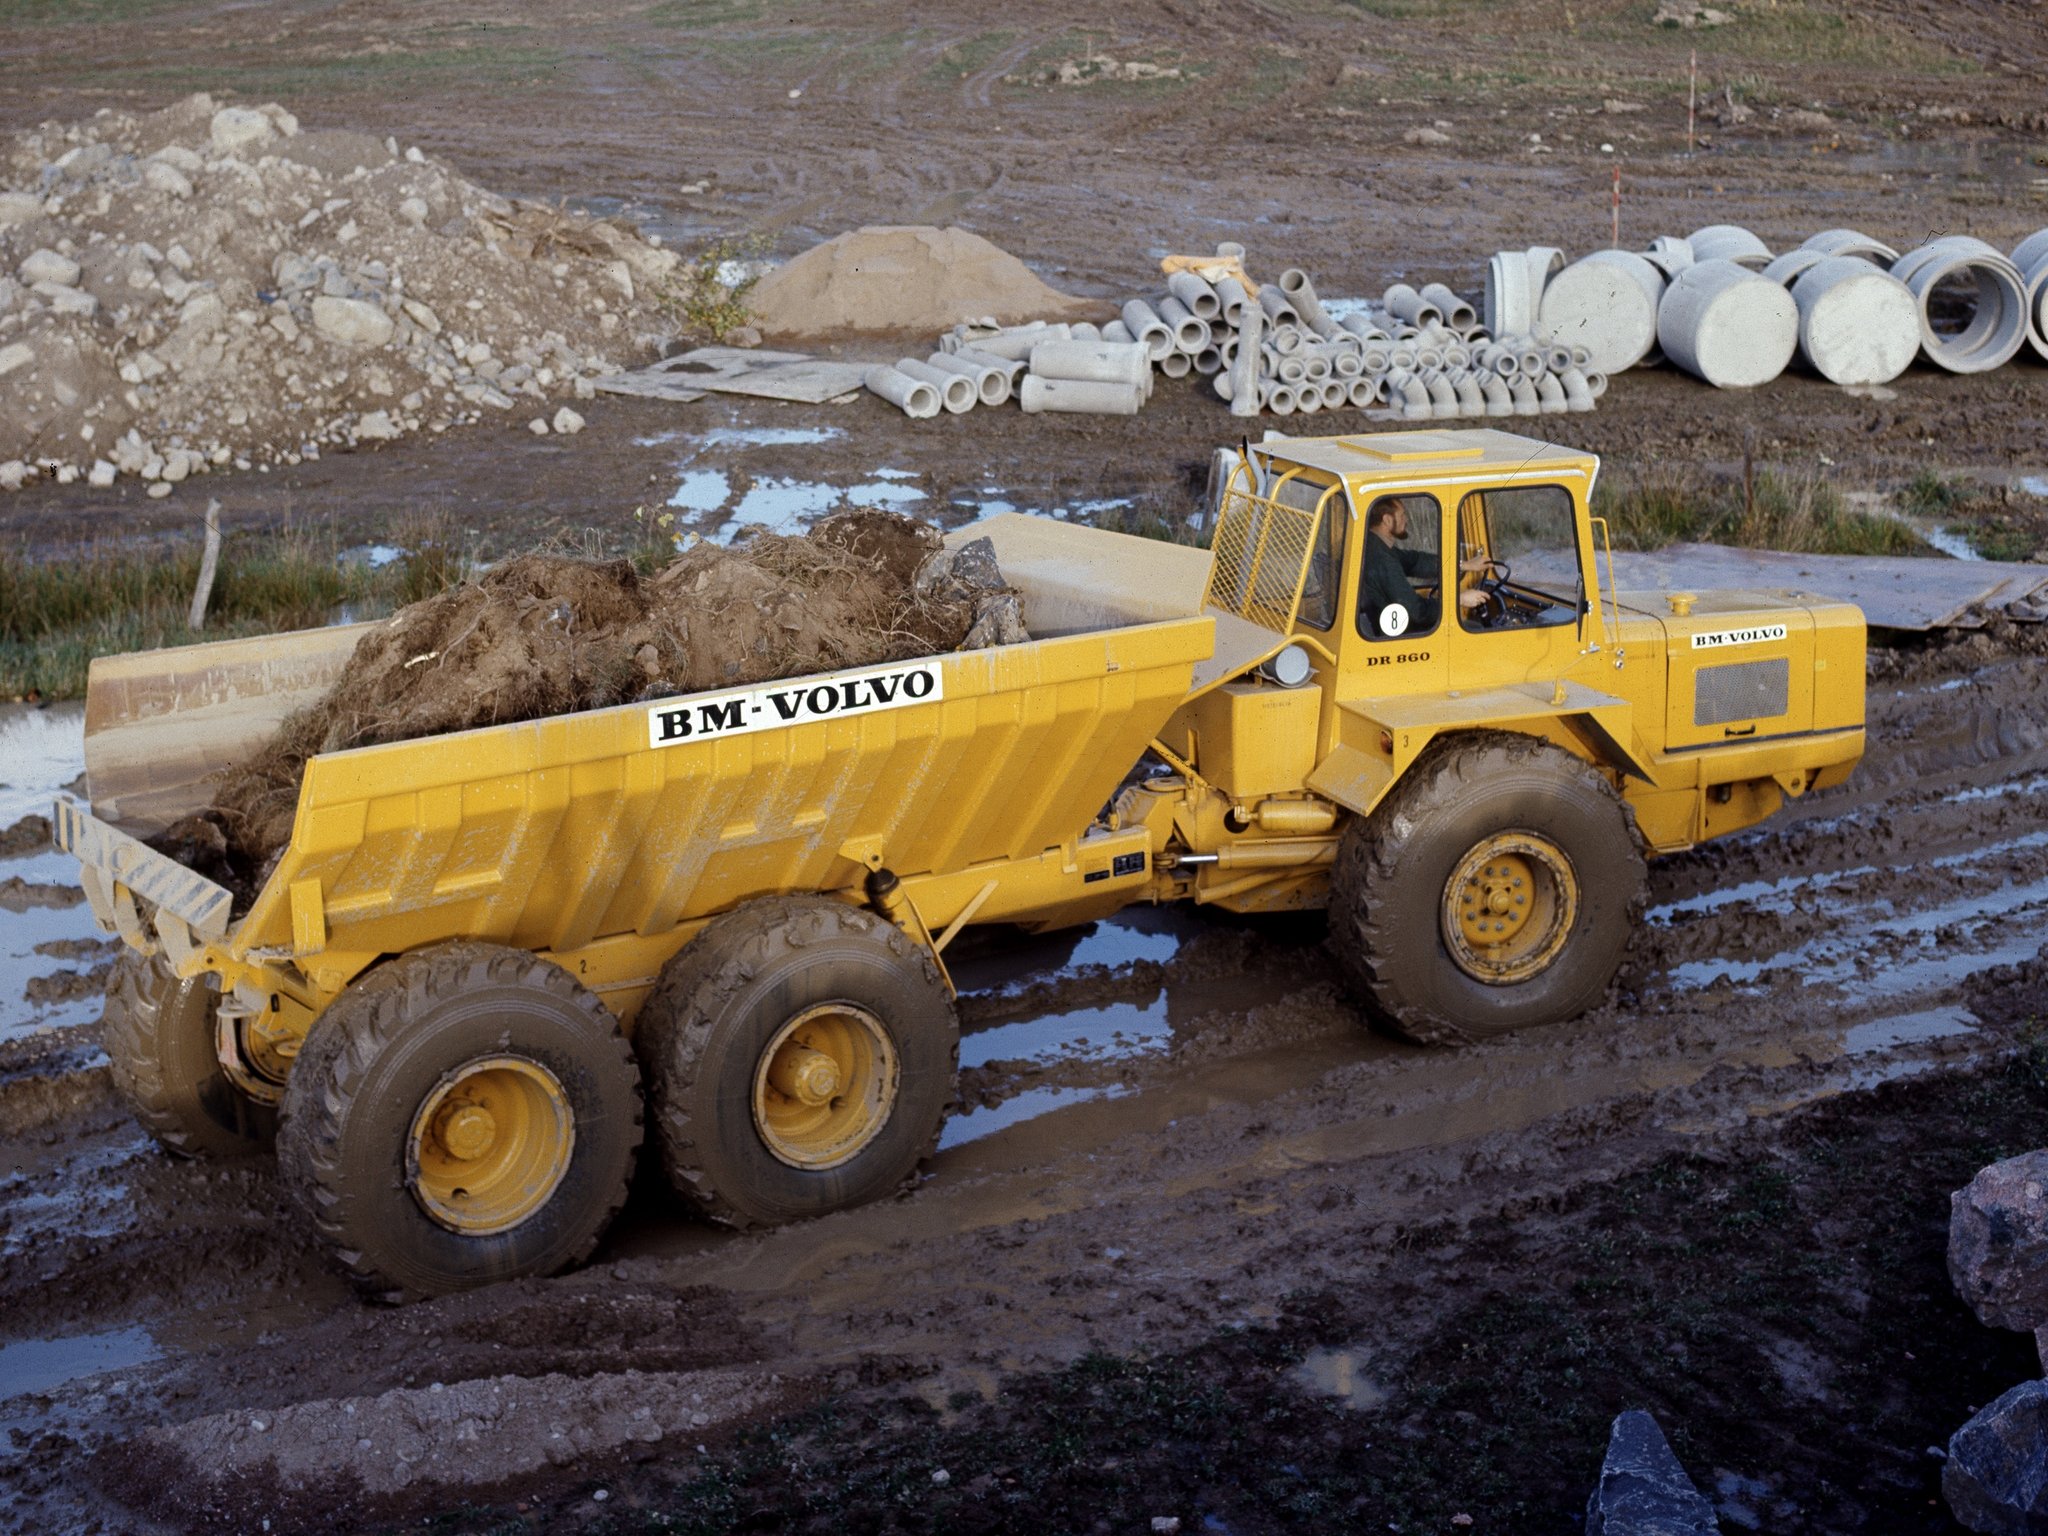 1968, Volvo, Model bm, Dr860, Quarry, Semi, Tractor, Construction Wallpaper